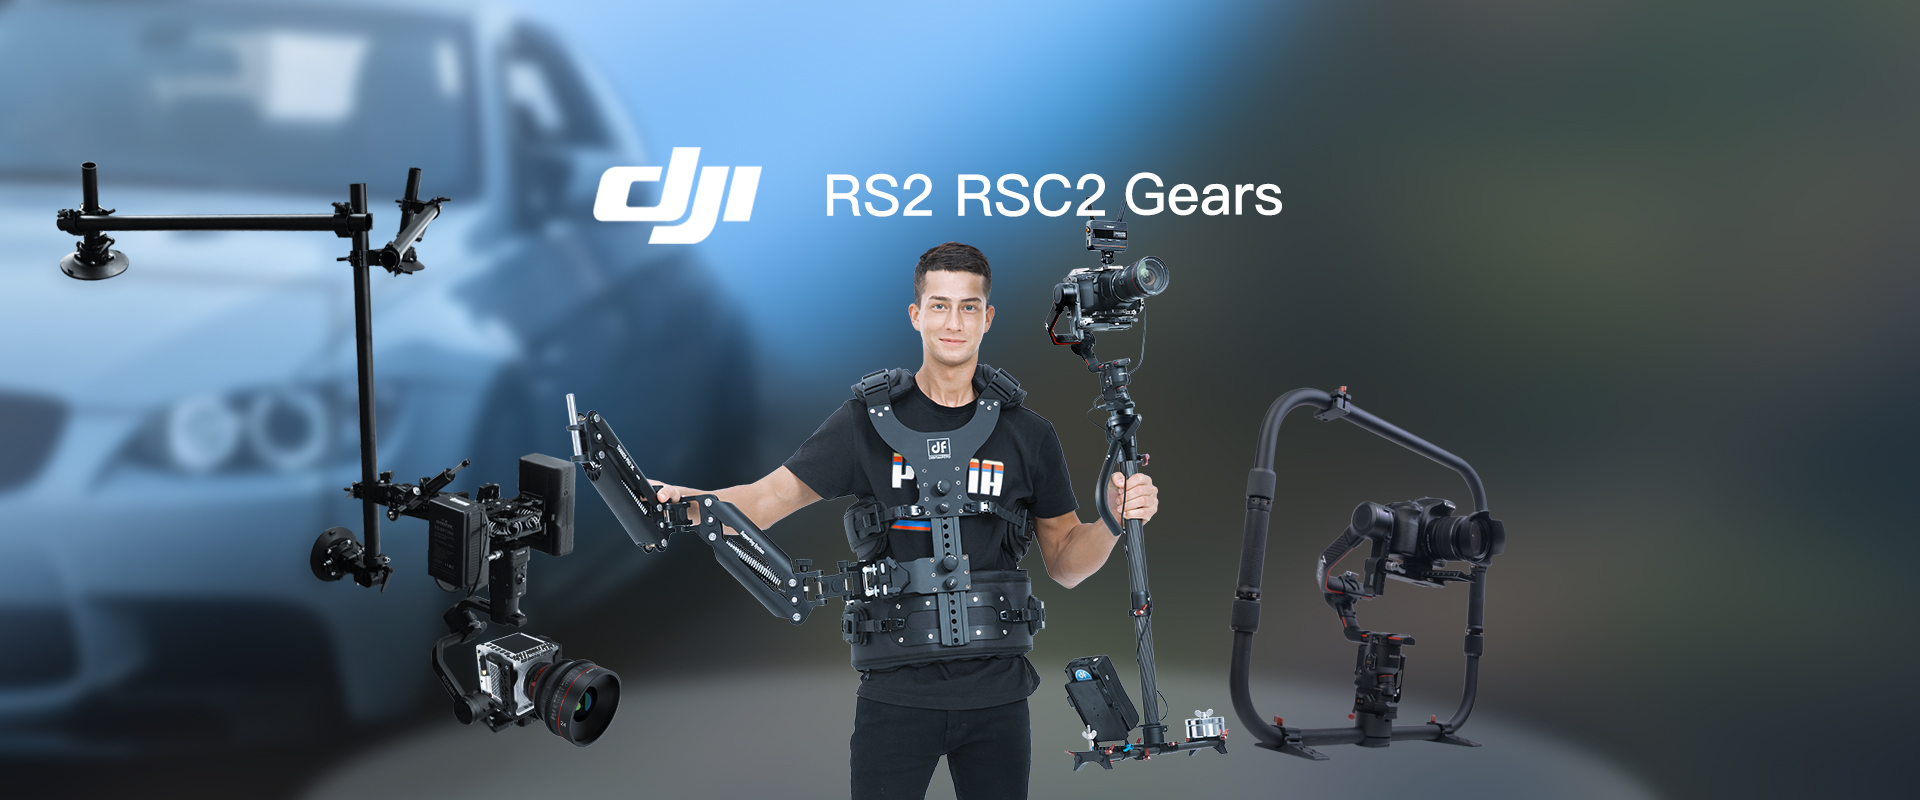 DJI RS2 RSC2 Gears